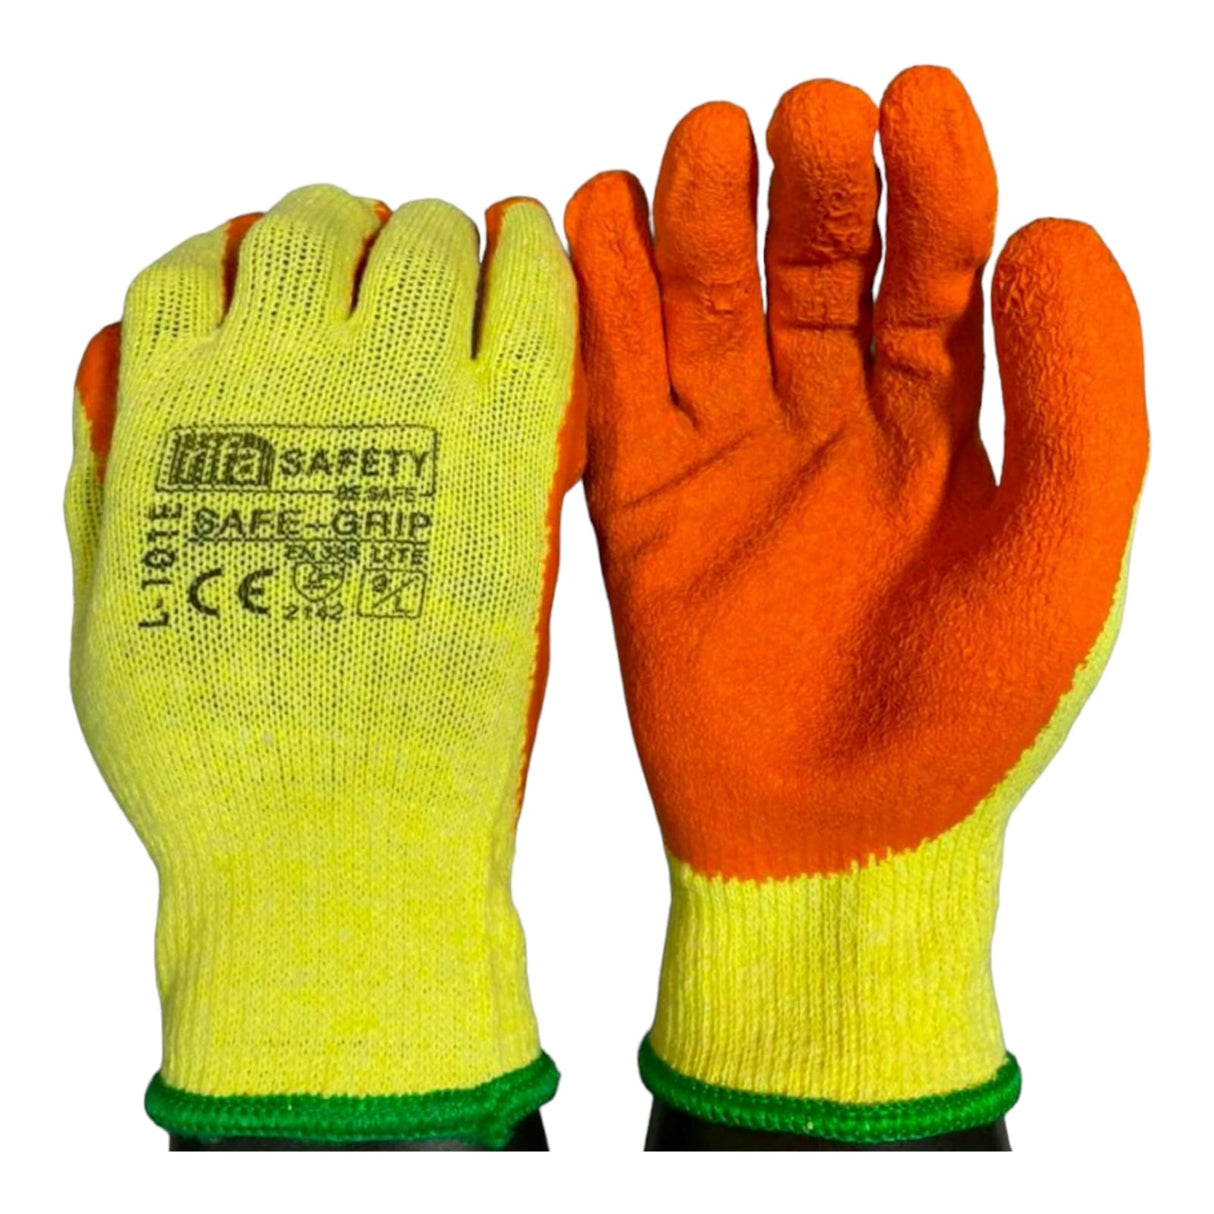 Garden Cotton Gloves with Rubber Grip 10 Pairs